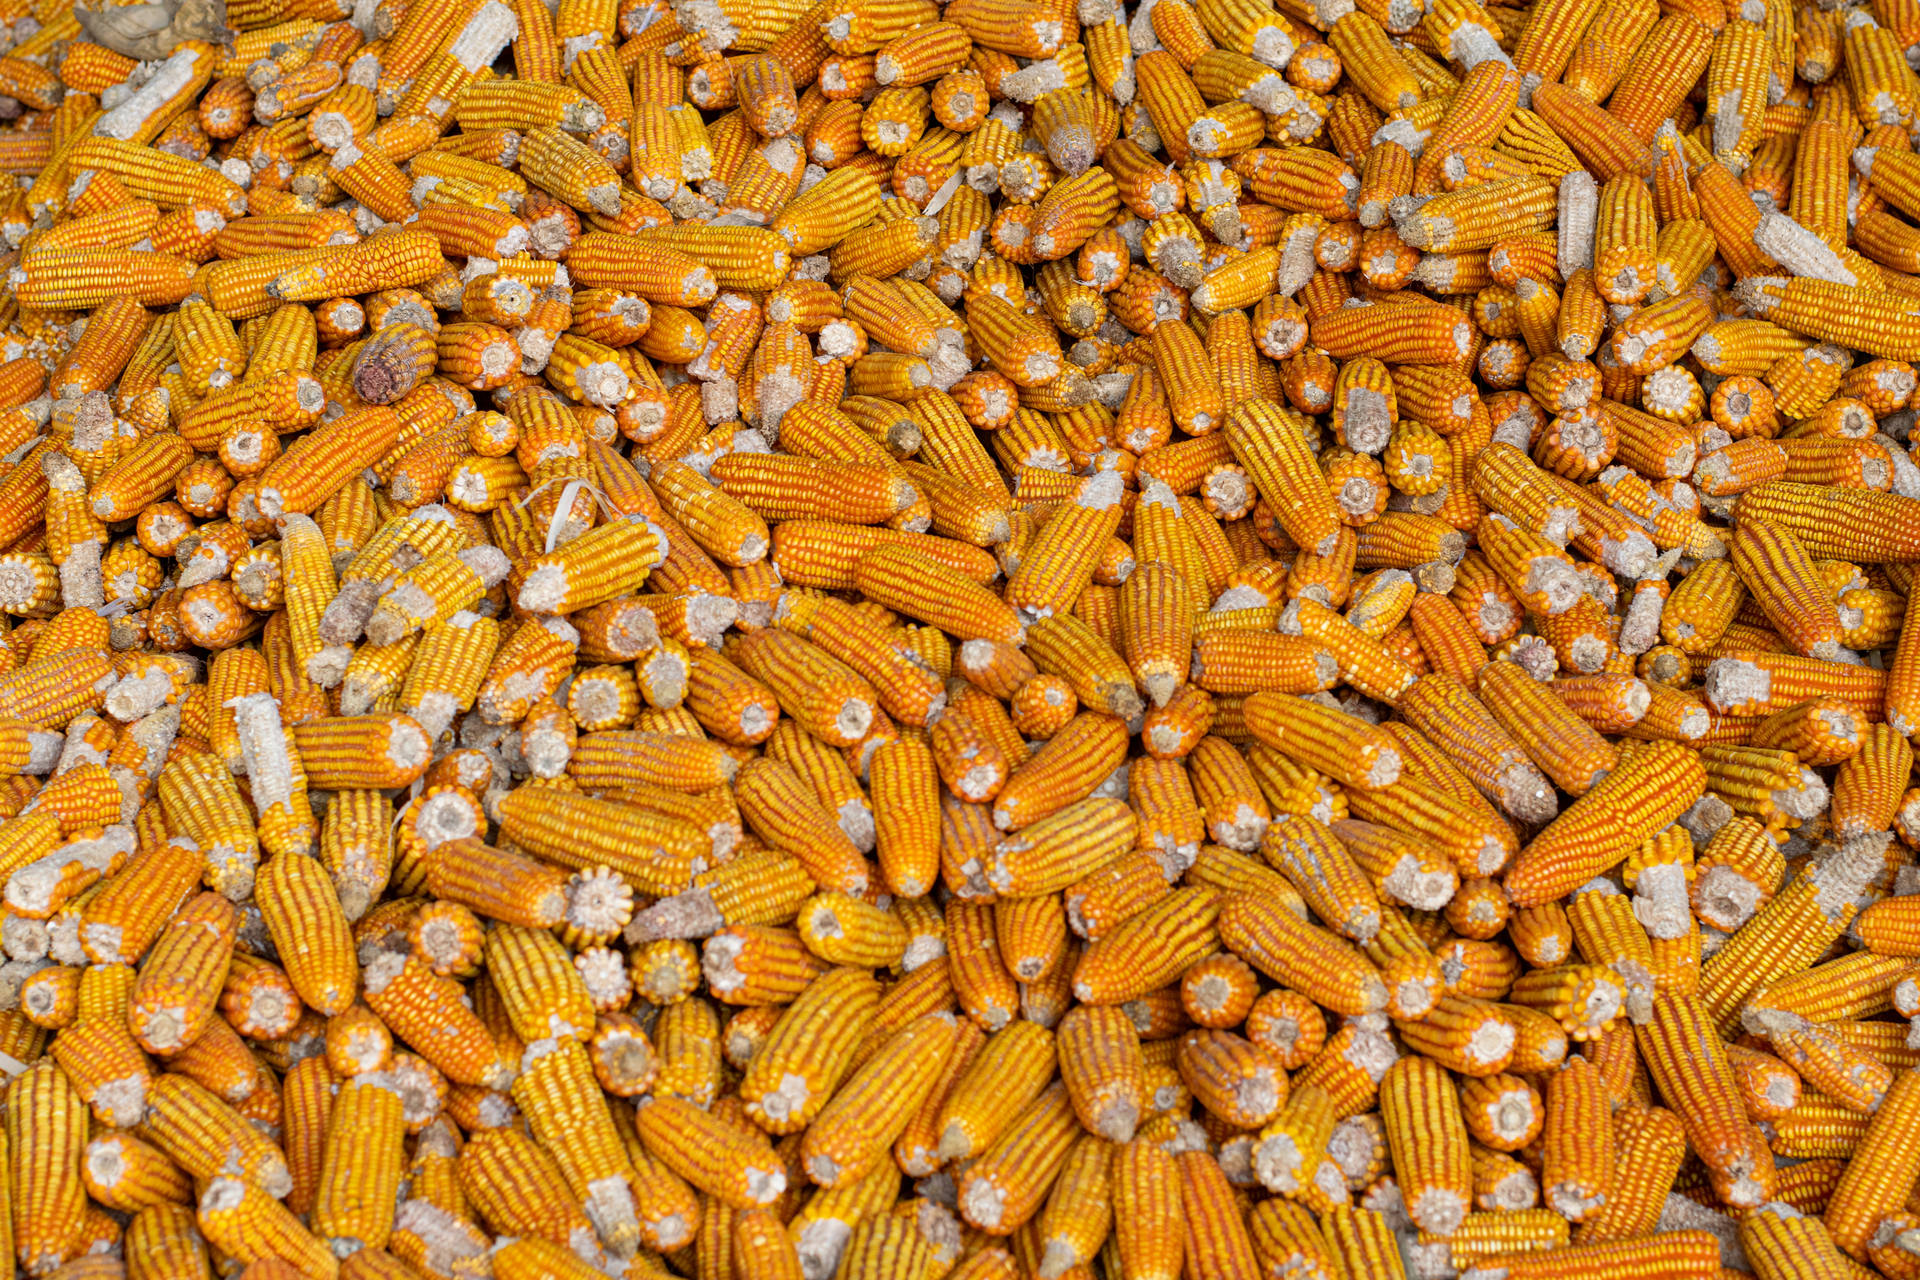 Orange And Yellow Corn Cobs